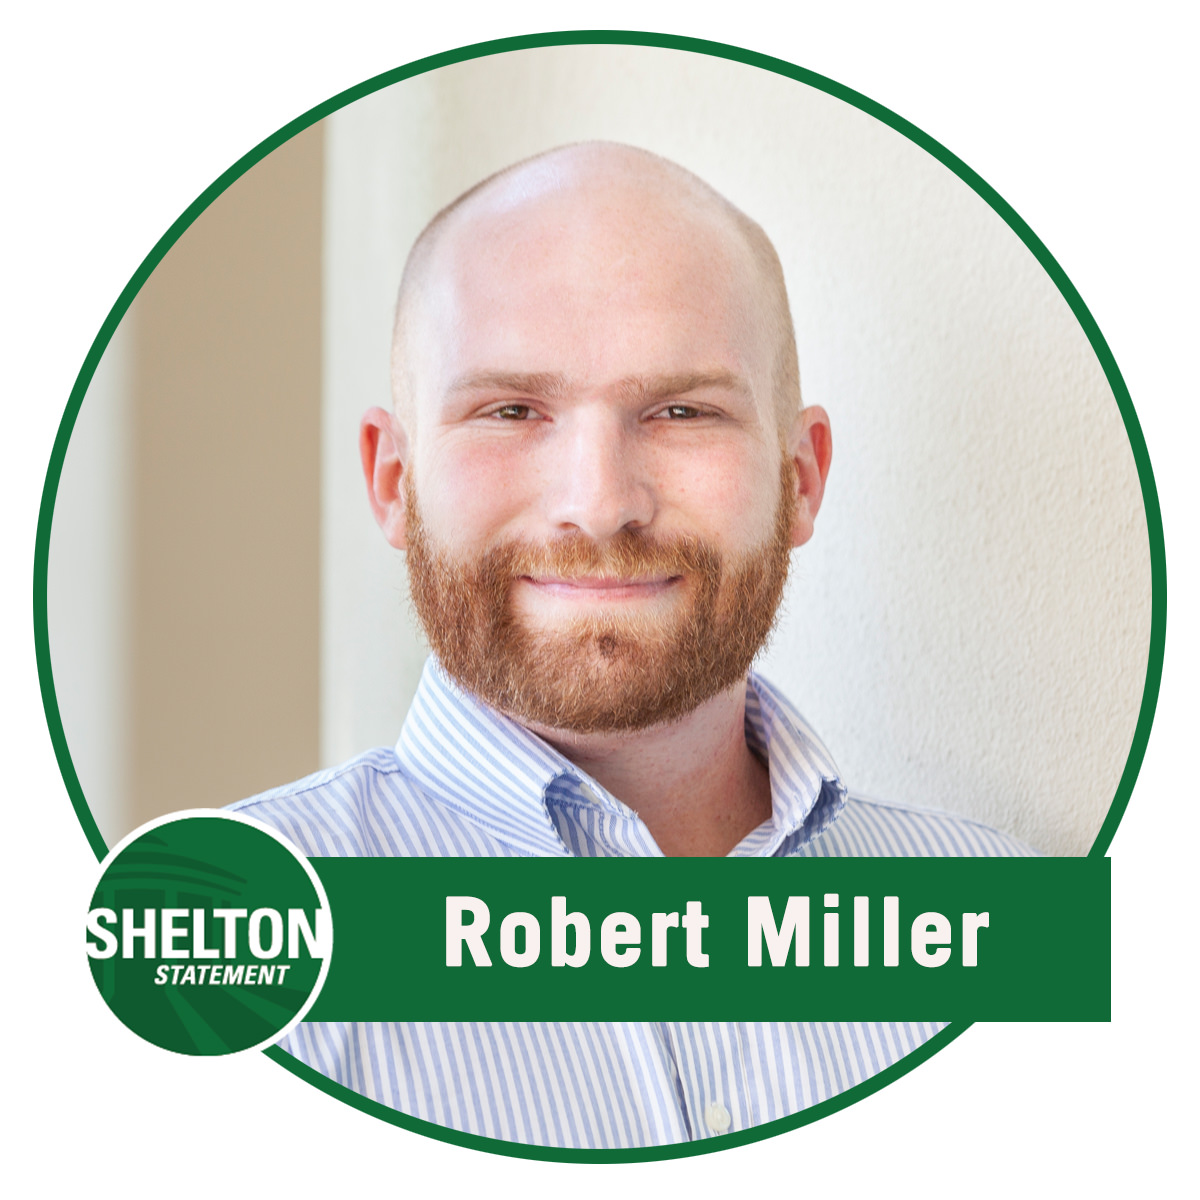 Robert Miller Shelton Statement